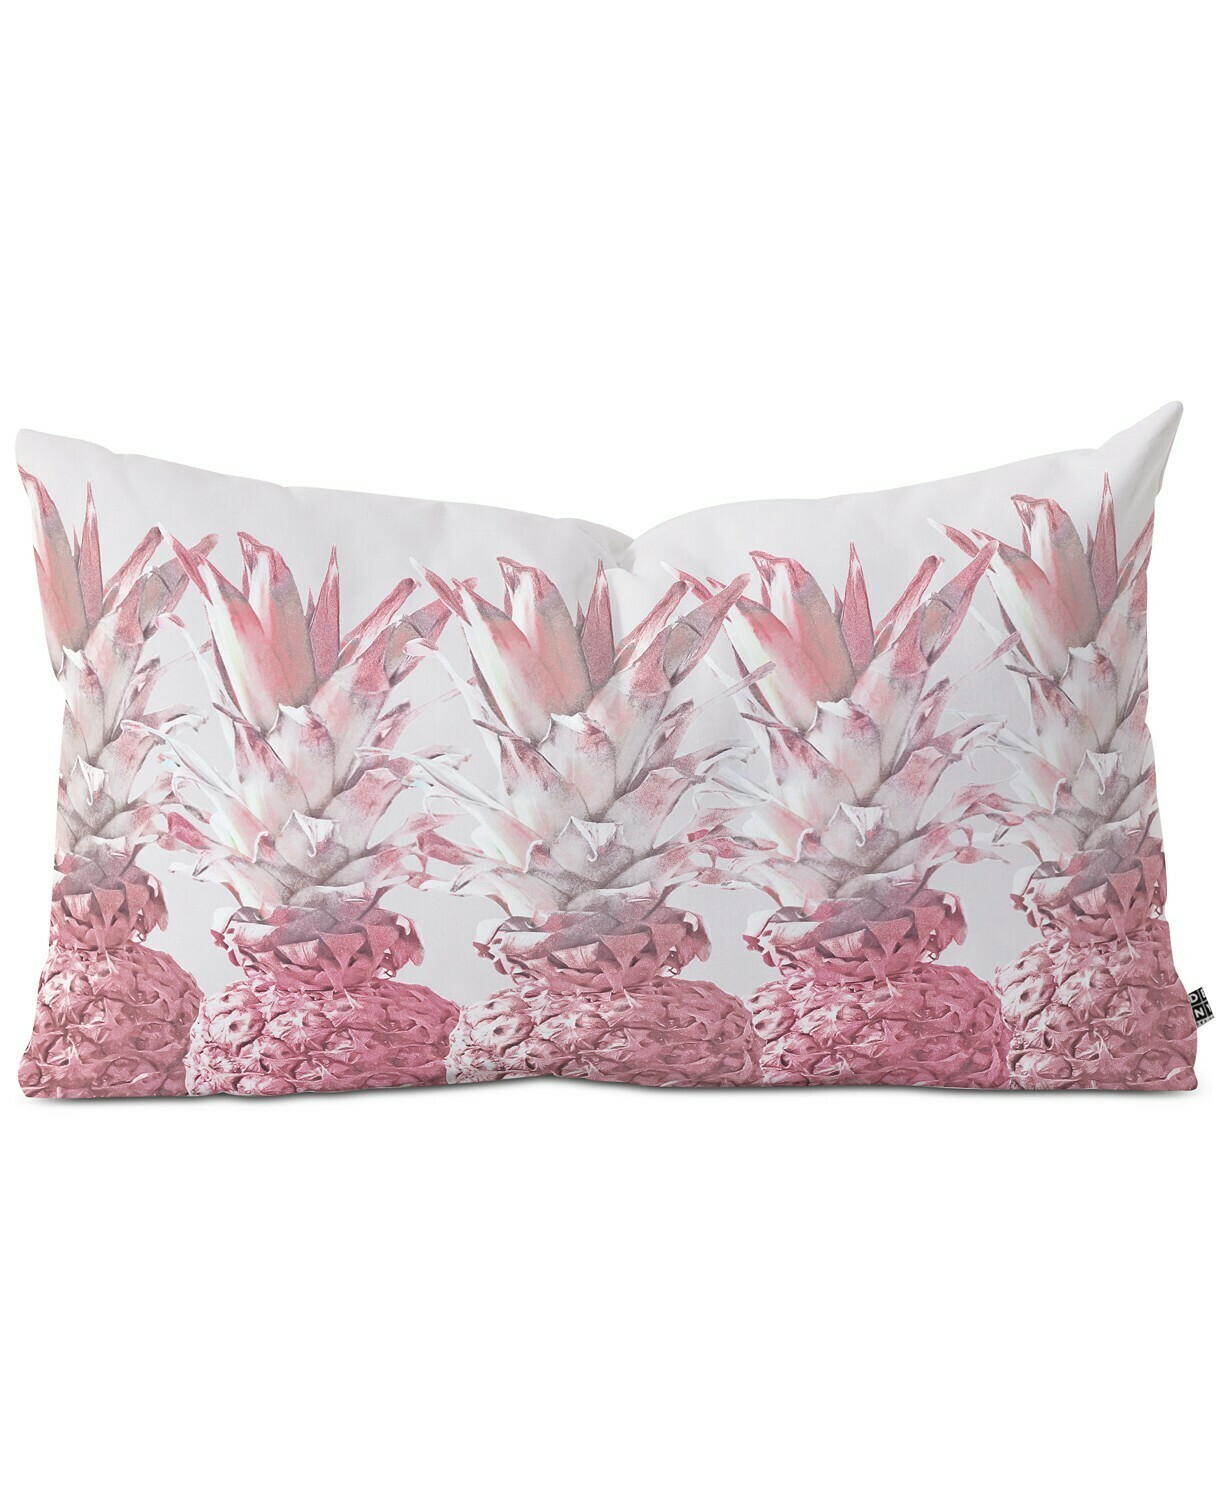 Deny Designs Pineapple Blush Jungle Oblong Decorative Pillow